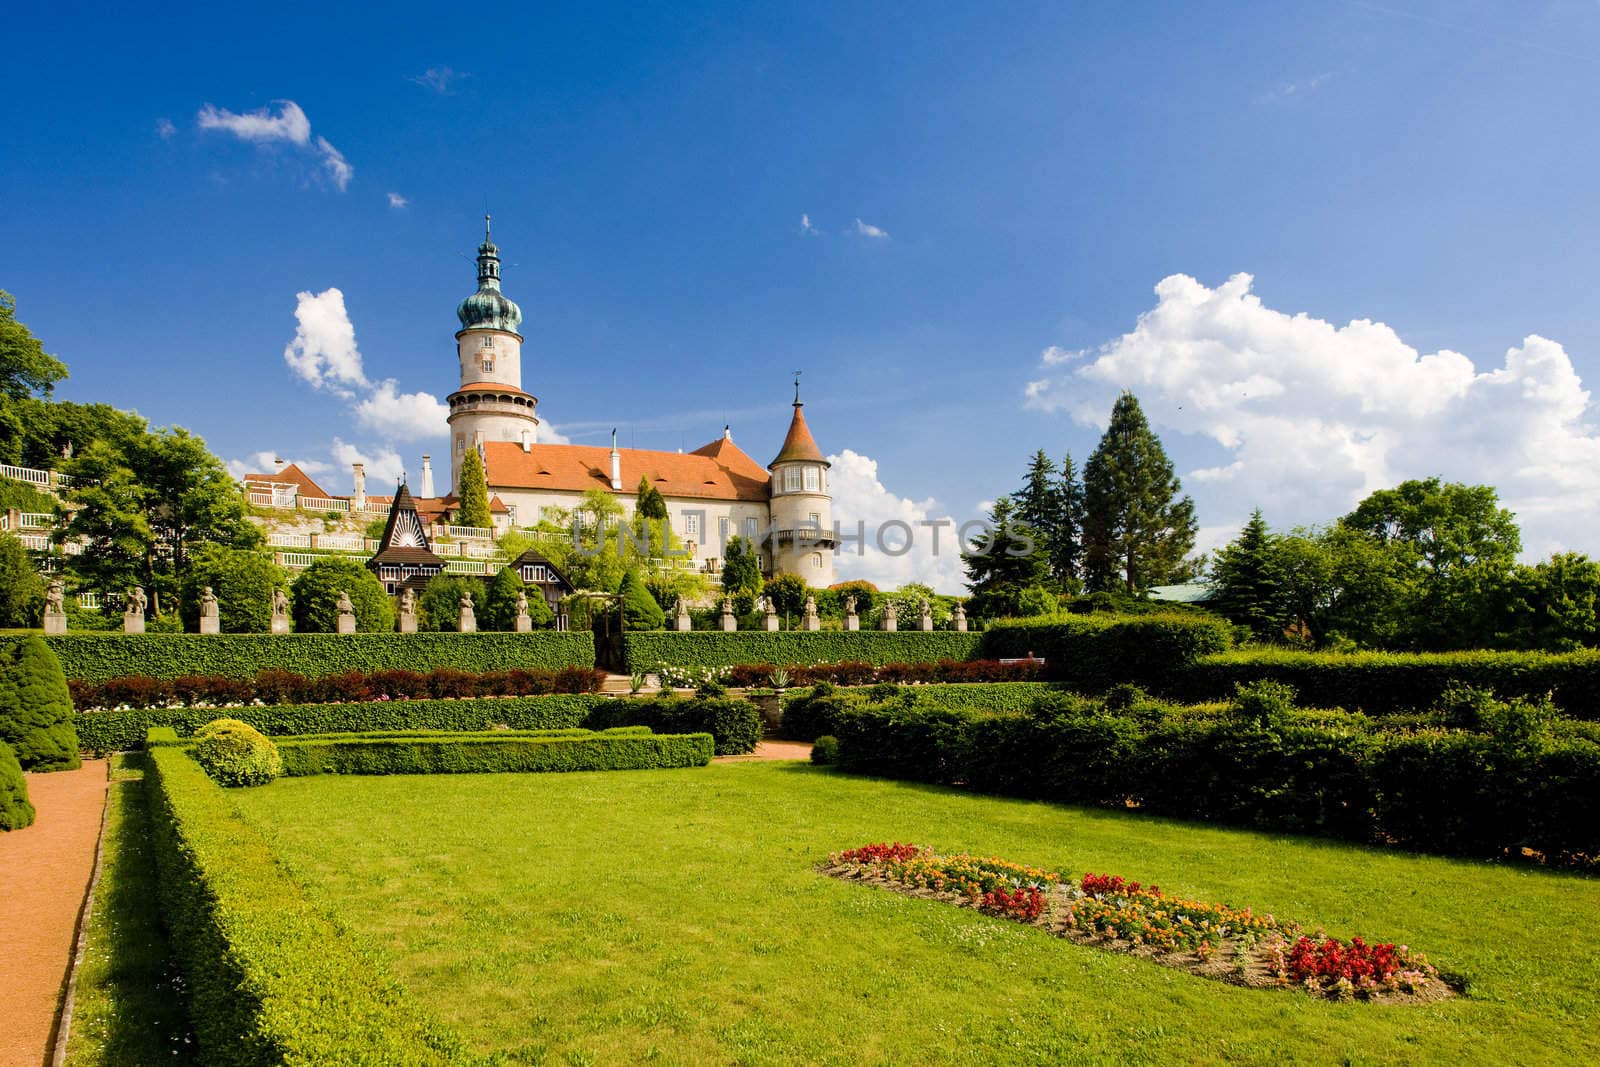 Castle of Nove Mesto nad Metuji with garden, Czech Republic by phbcz